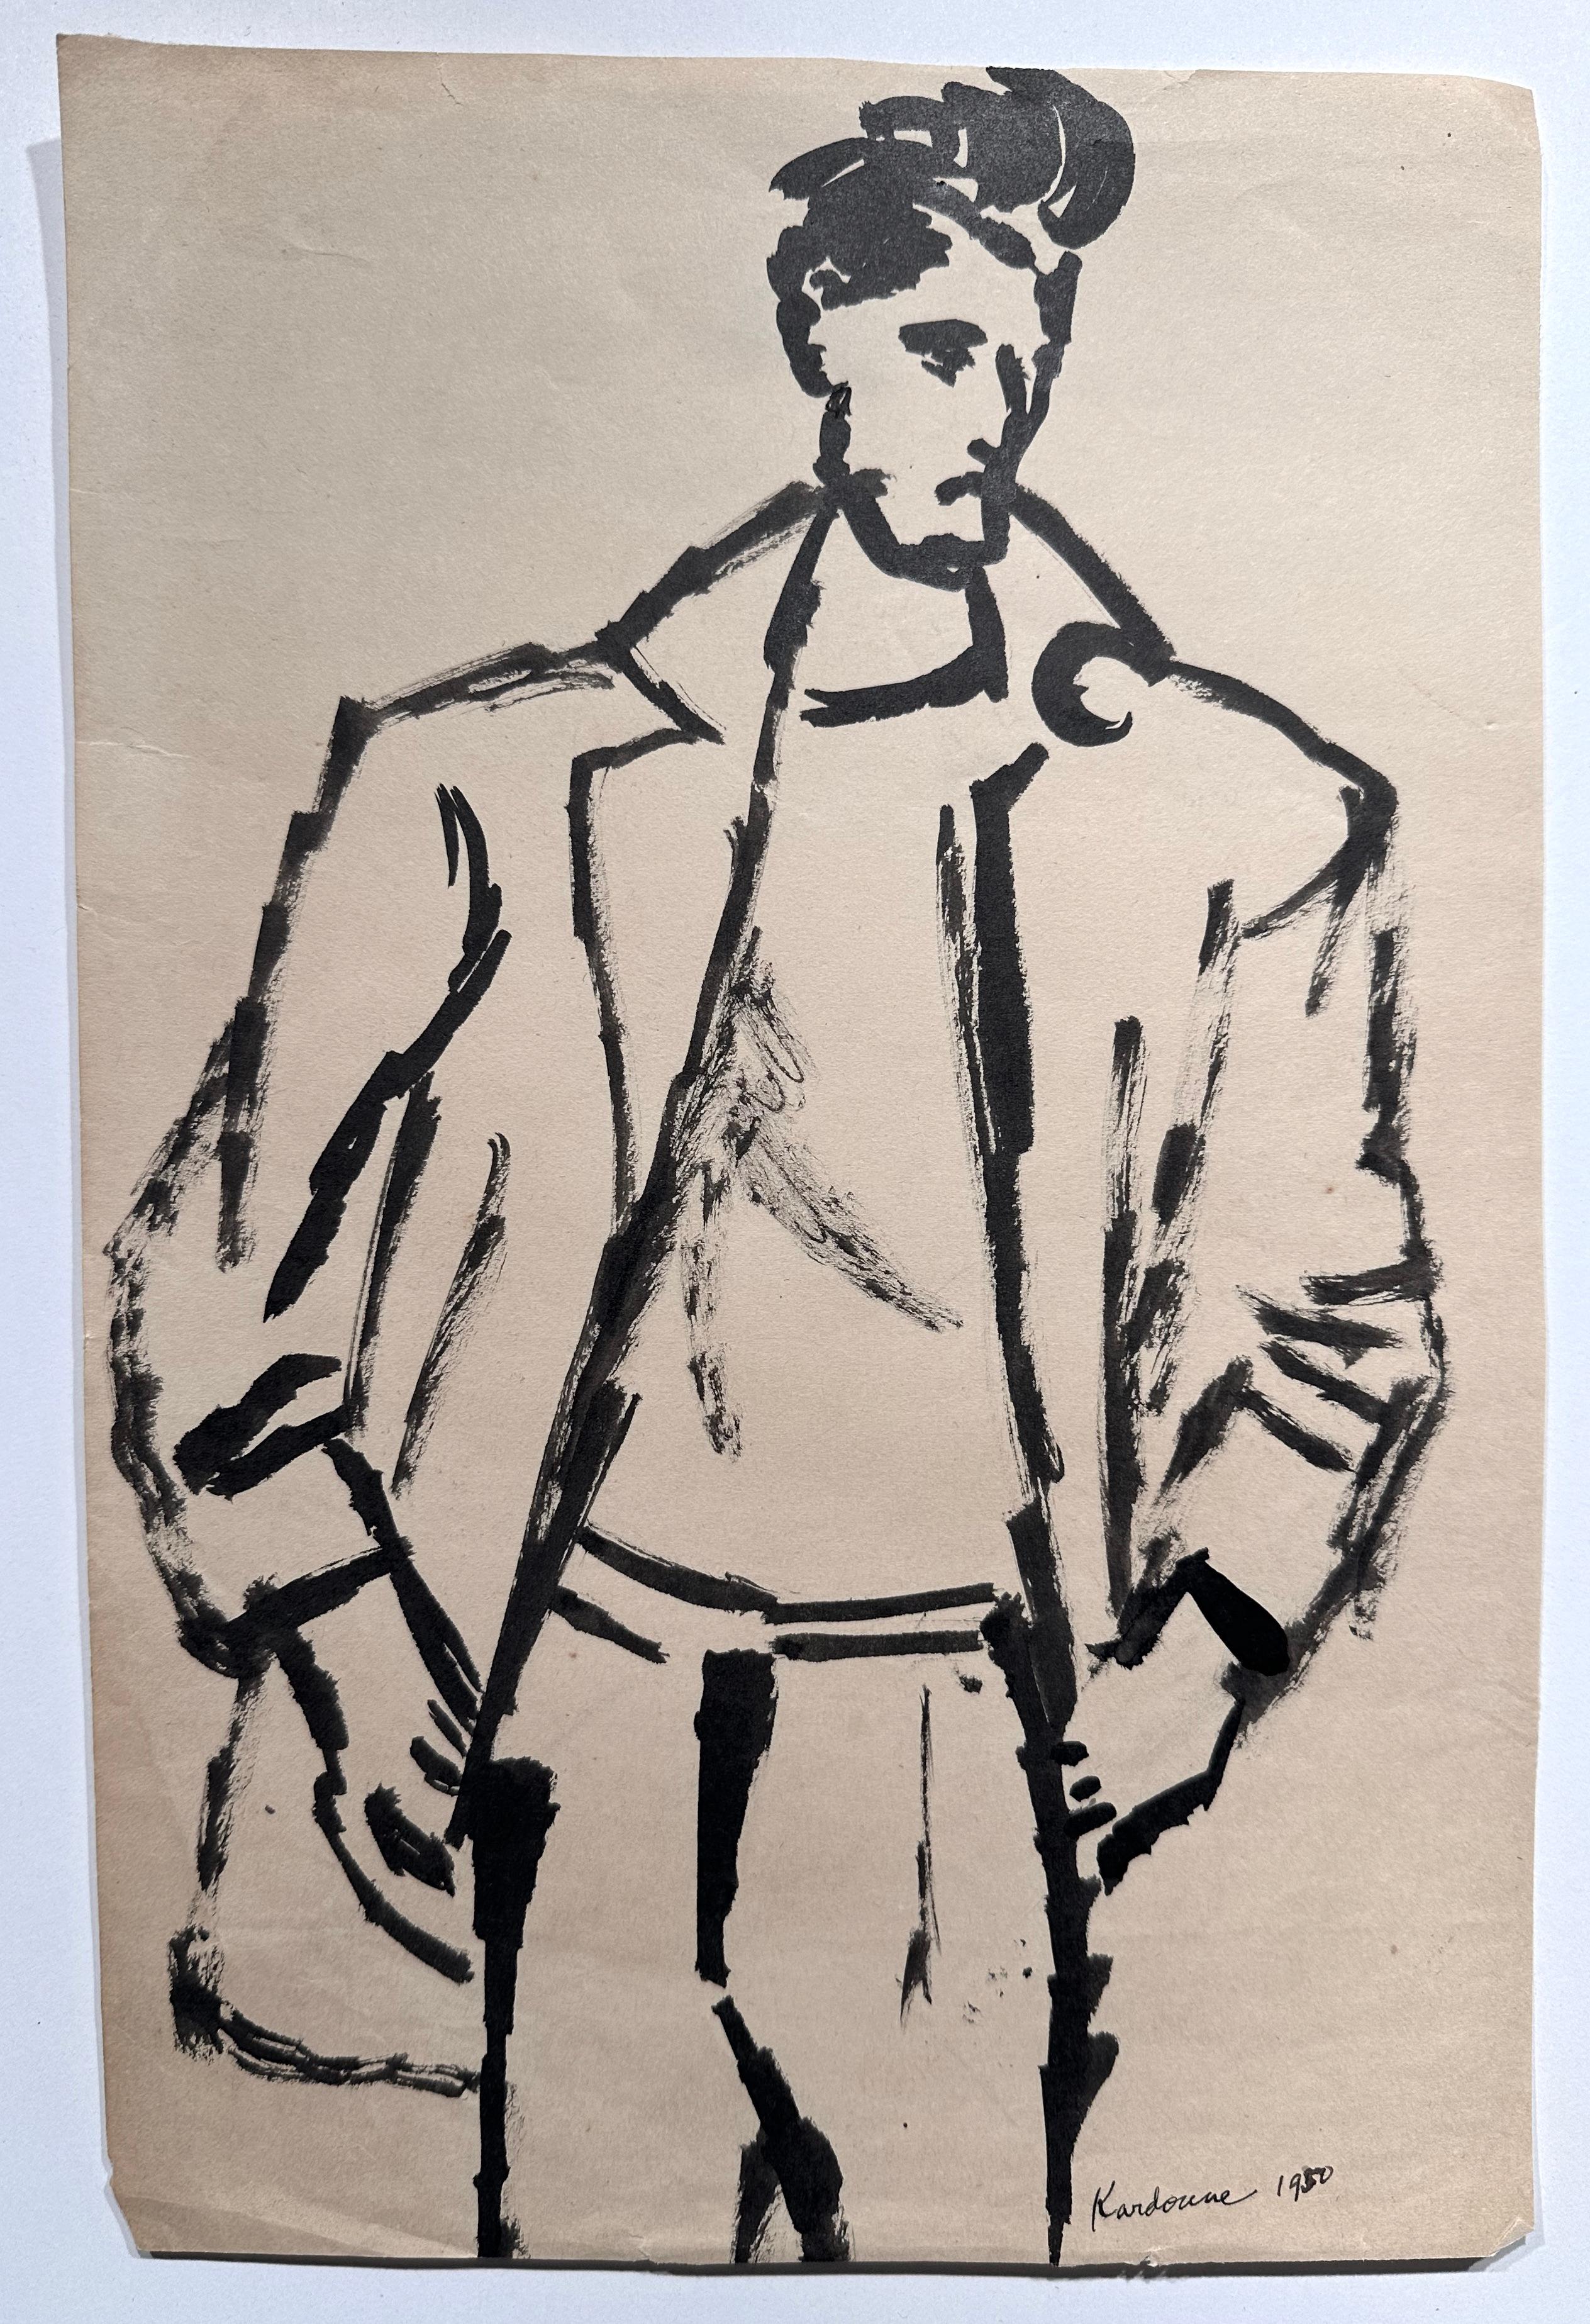 Portrait of Man in Trench Coat